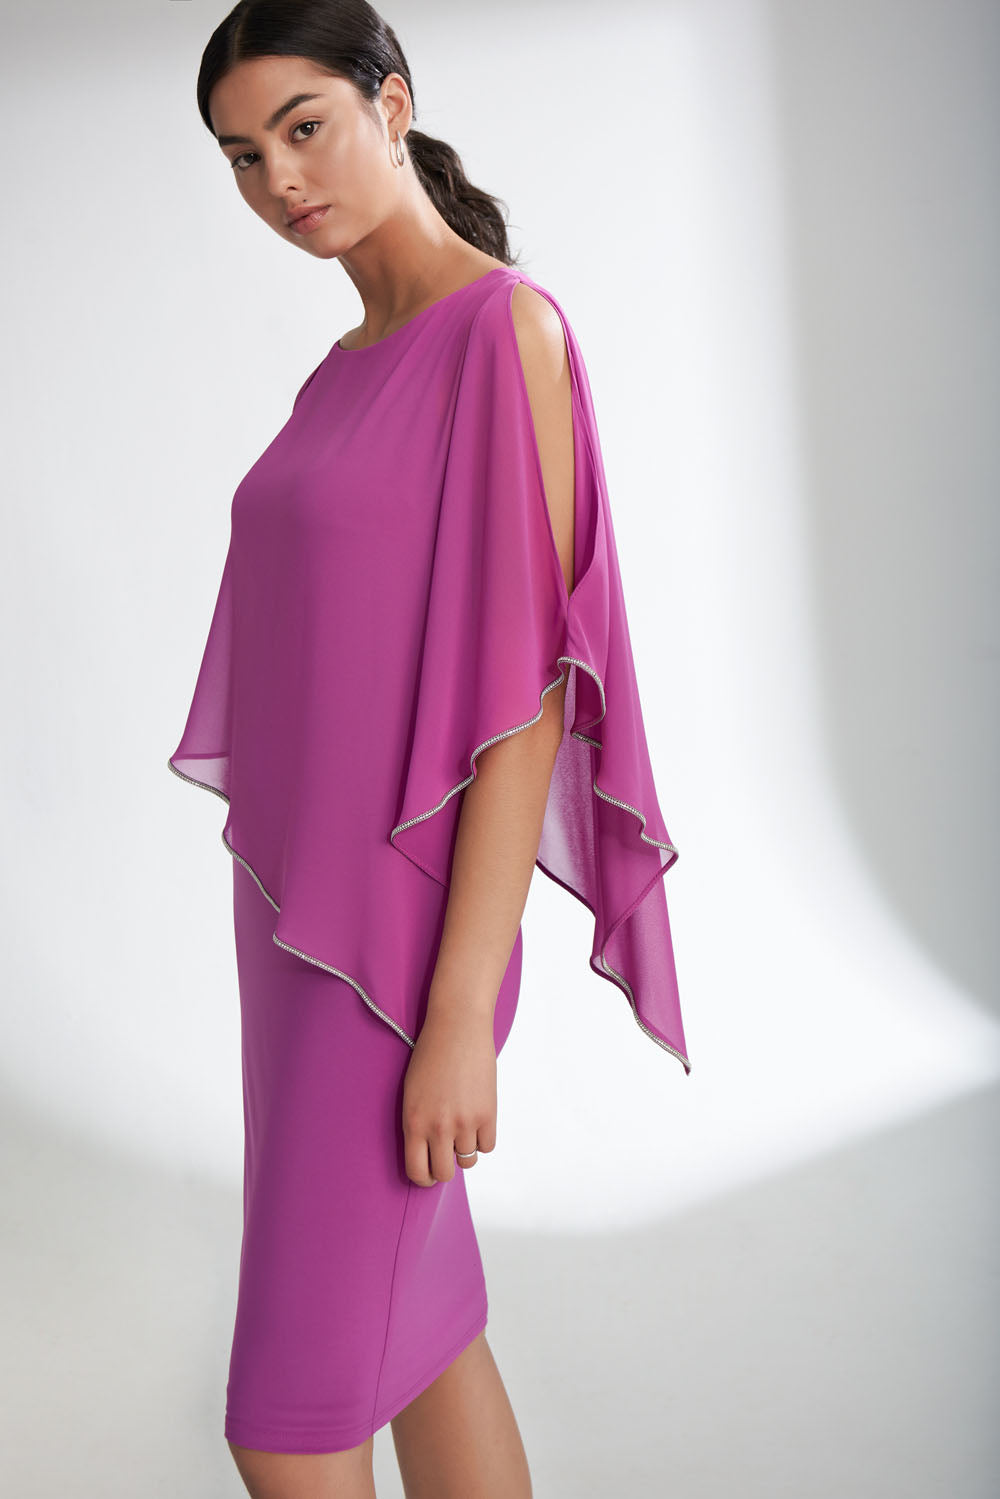 Joseph Ribkoff Sparkling Grape Layered Dress Style 221062